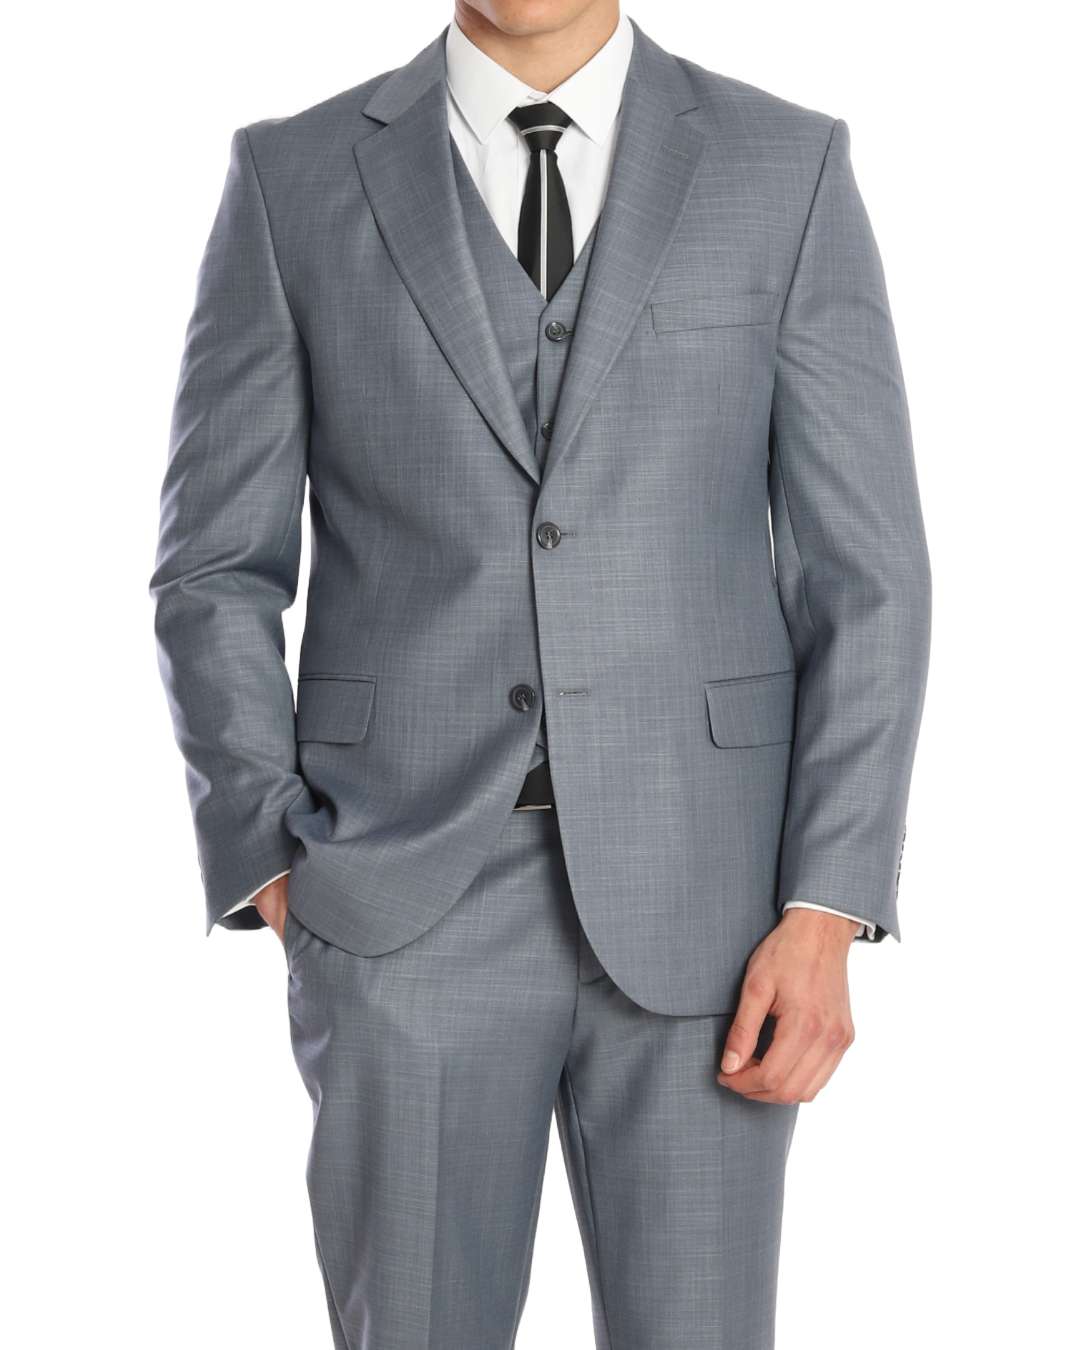 ICONY ASHES I - Bluish Grey Texture Plain Three Piece Suit